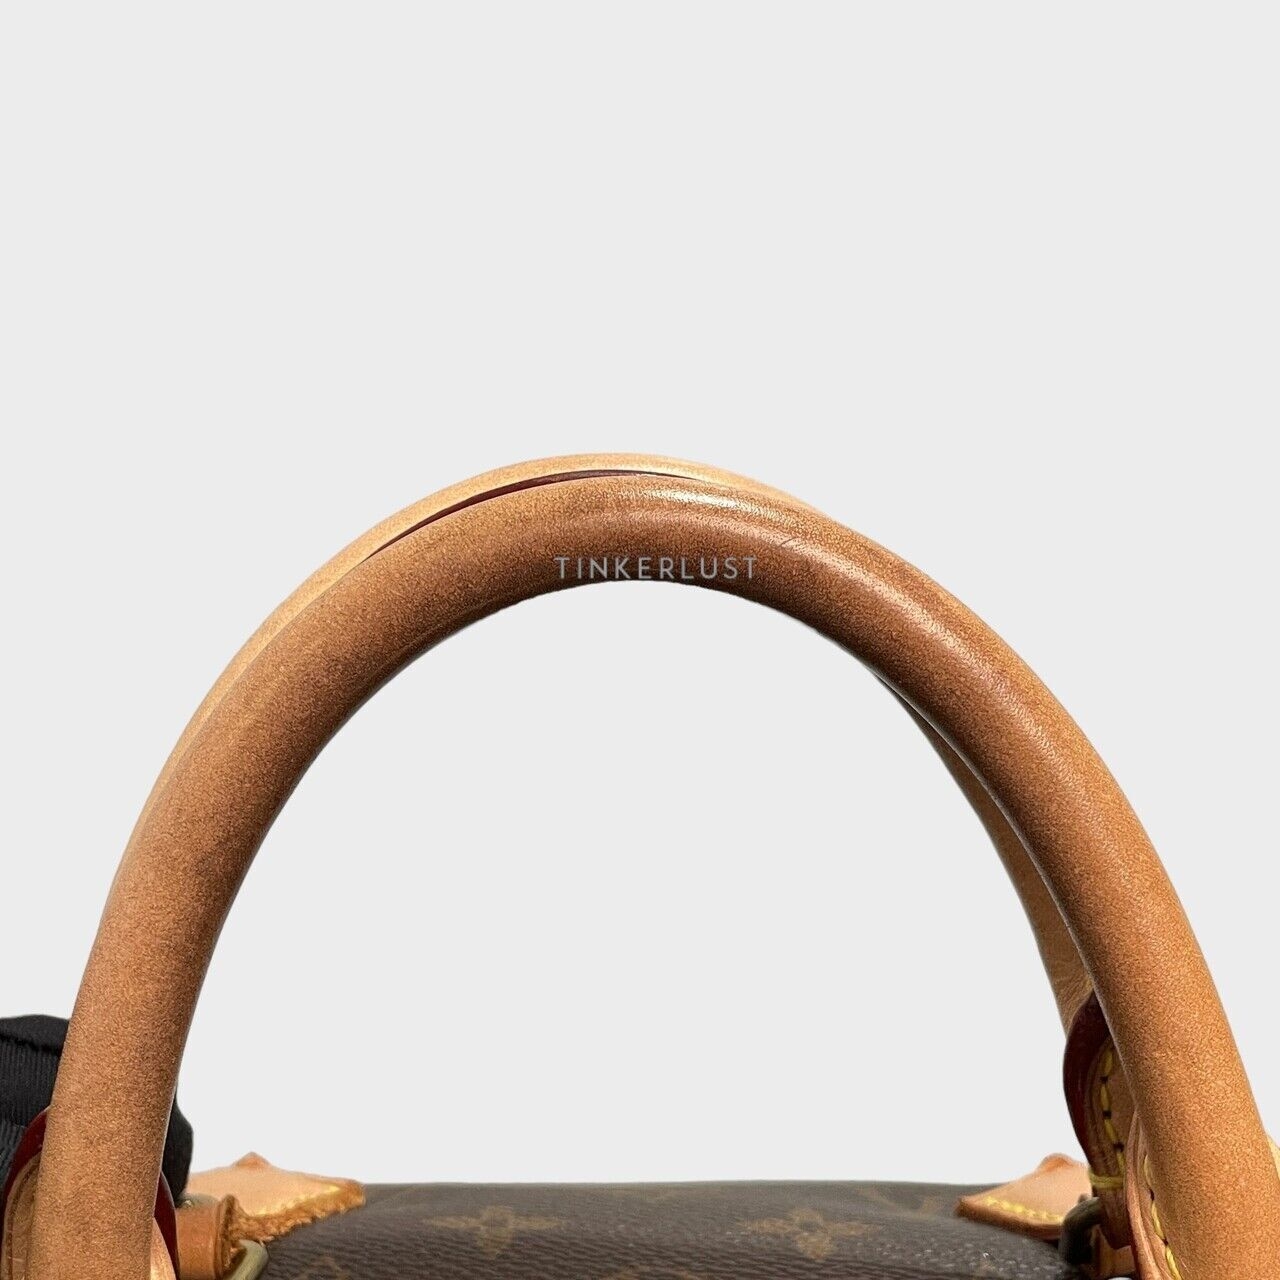 Louis Vuitton Speedy 30 Monogram Bandouliere Bag